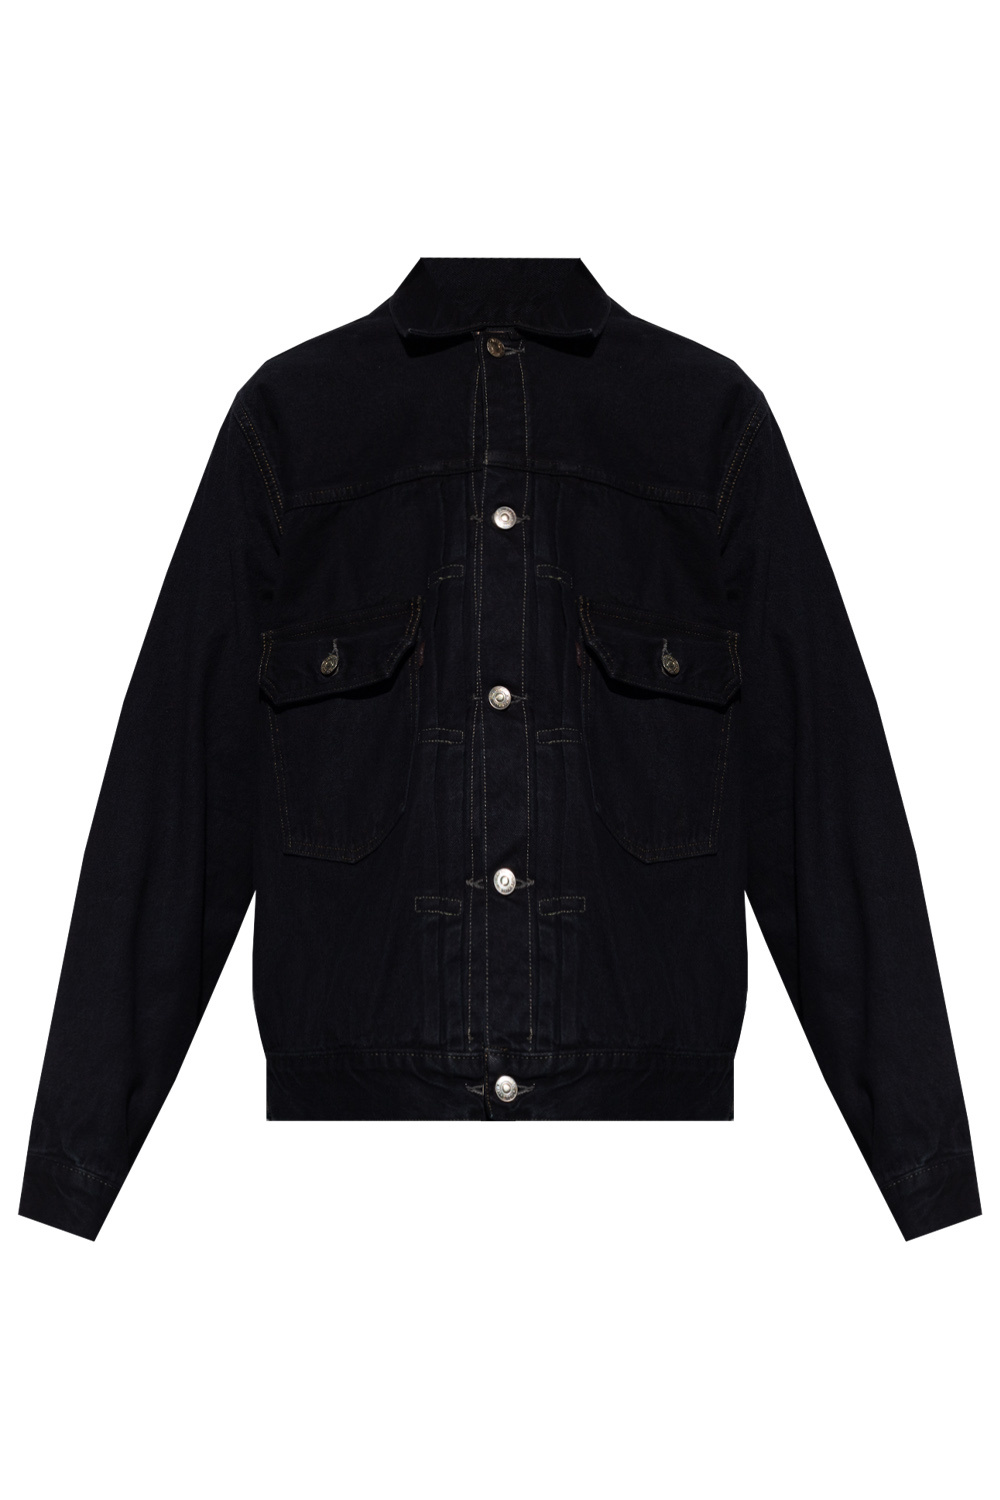 Levi's Denim soft jacket ‘Vintage Clothing’ collection